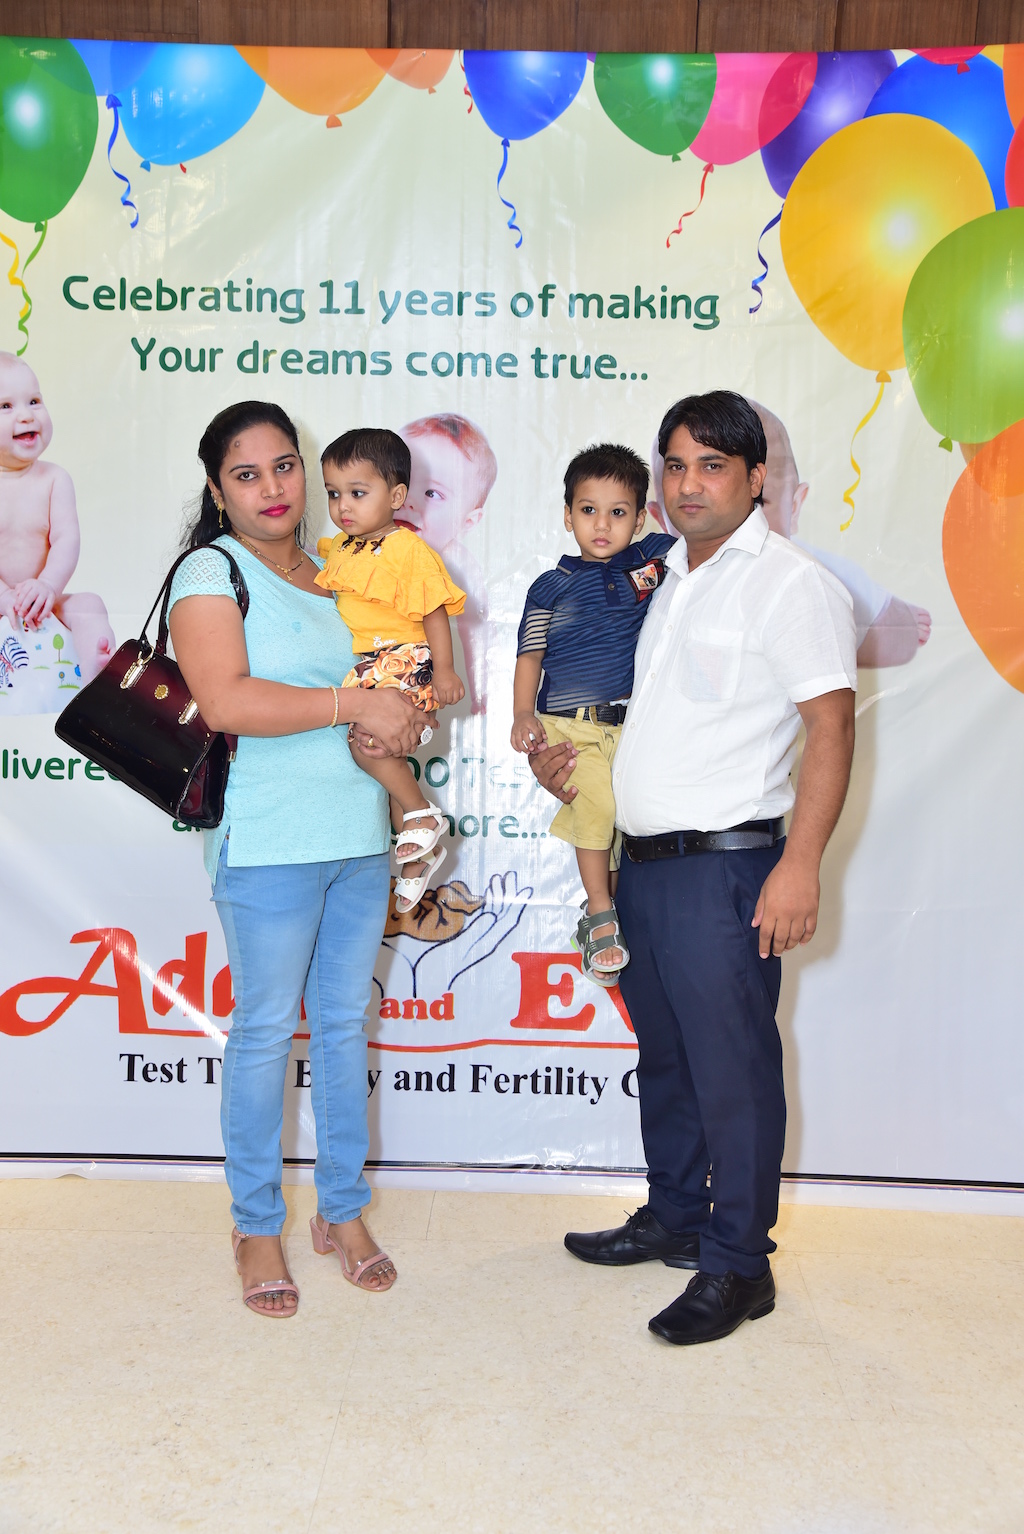 Best Test Tube Baby Centre in Noida, Test Tube Baby Center in Noida, Infertility Treatment in Noida, IVF Centre in Noida, Fertility Centre in Noida, IVF Doctor in Noida, IVF Fertility Centre in Noida